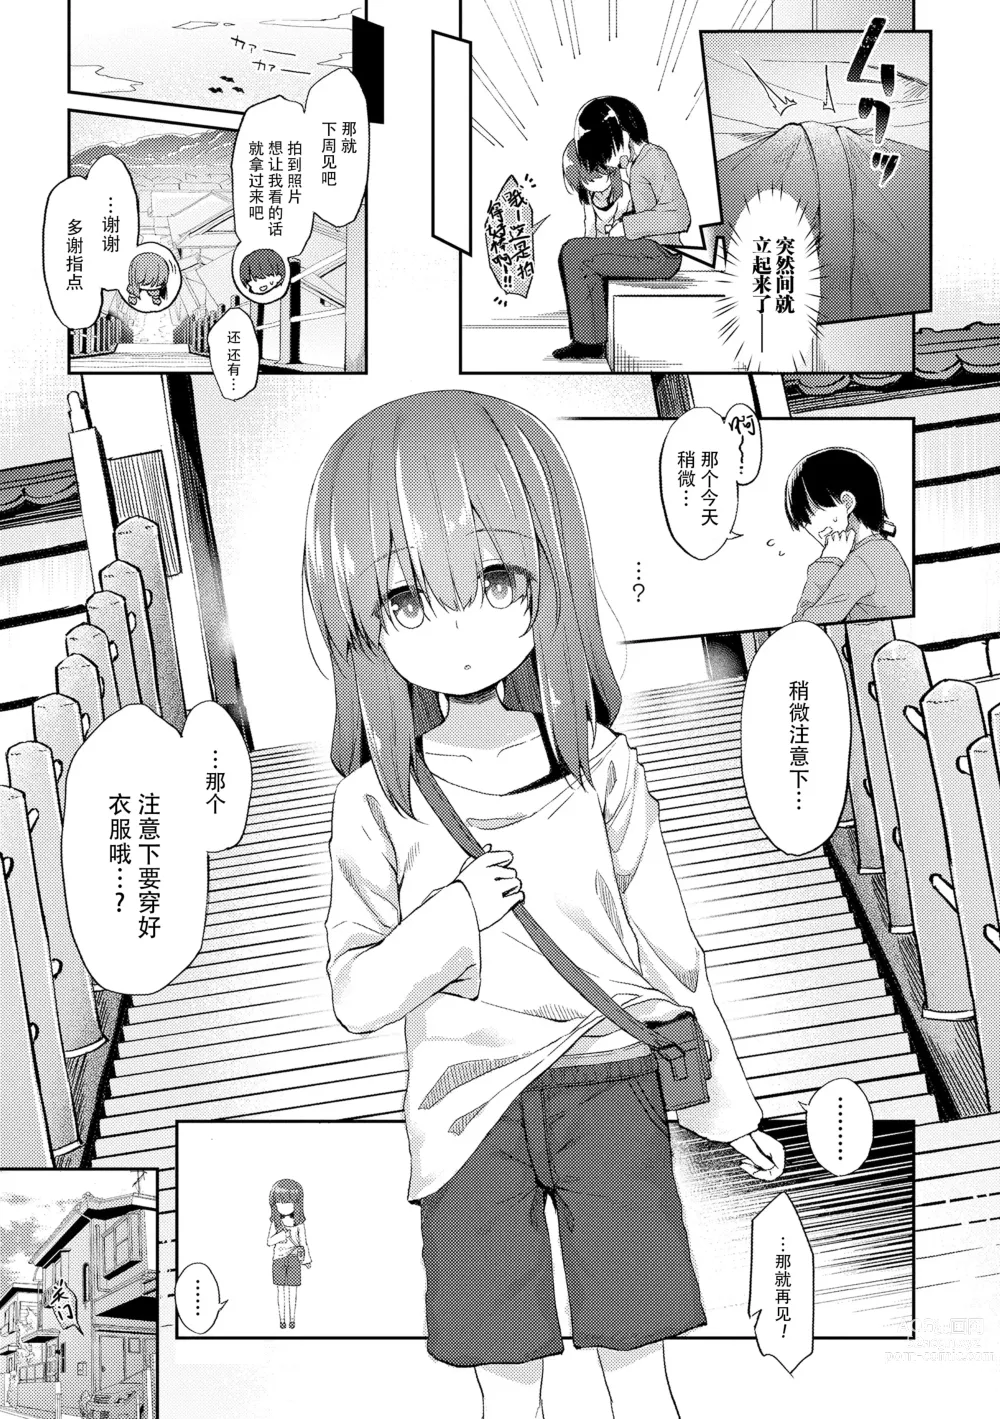 Page 9 of manga  只为你而结的果实 Ch. 1,2,7 (uncensored)